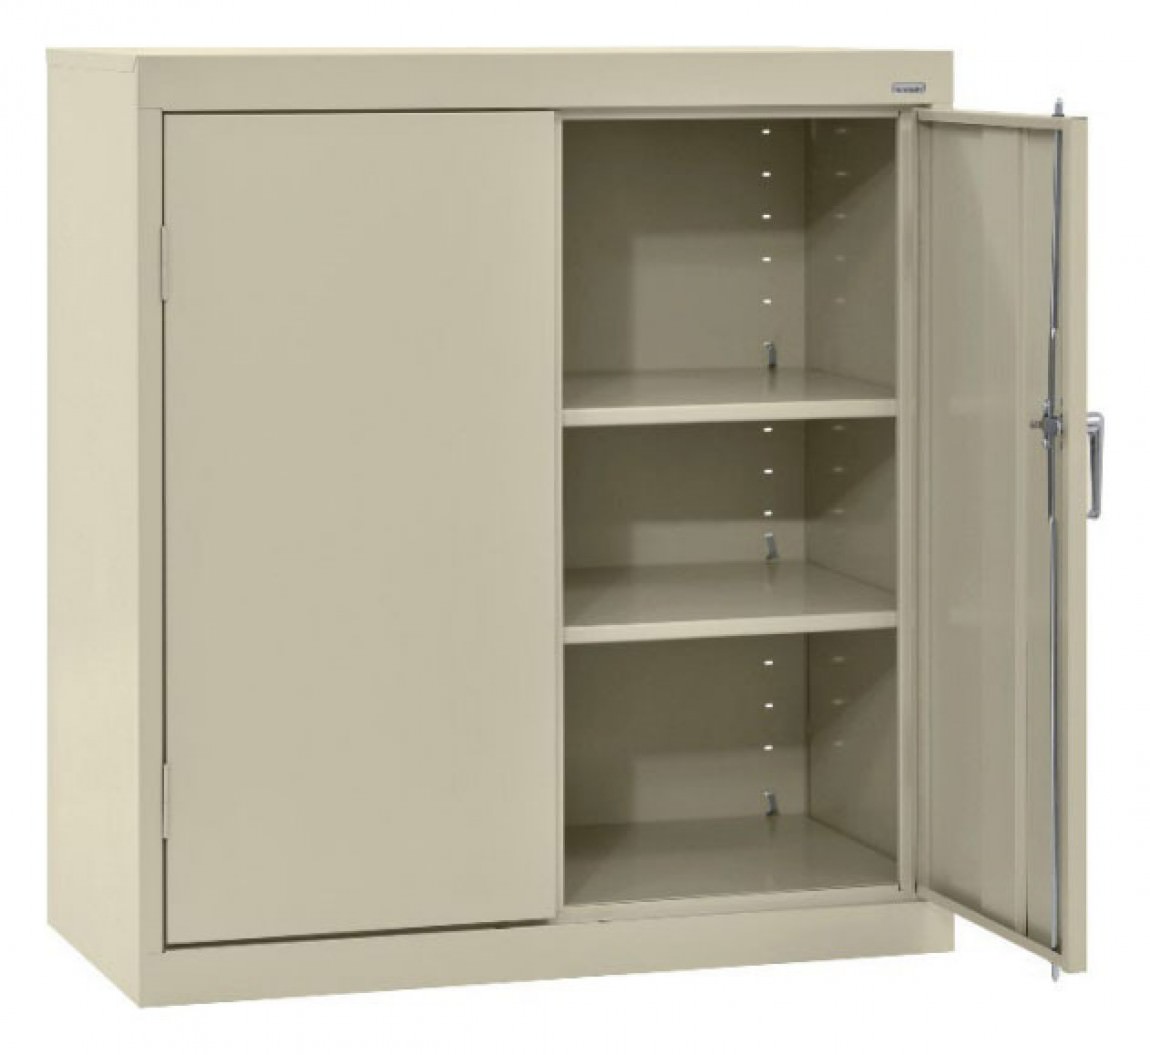 https://madisonliquidators.com/images/p/1150/34402-small-storage-cabinet-1.jpg